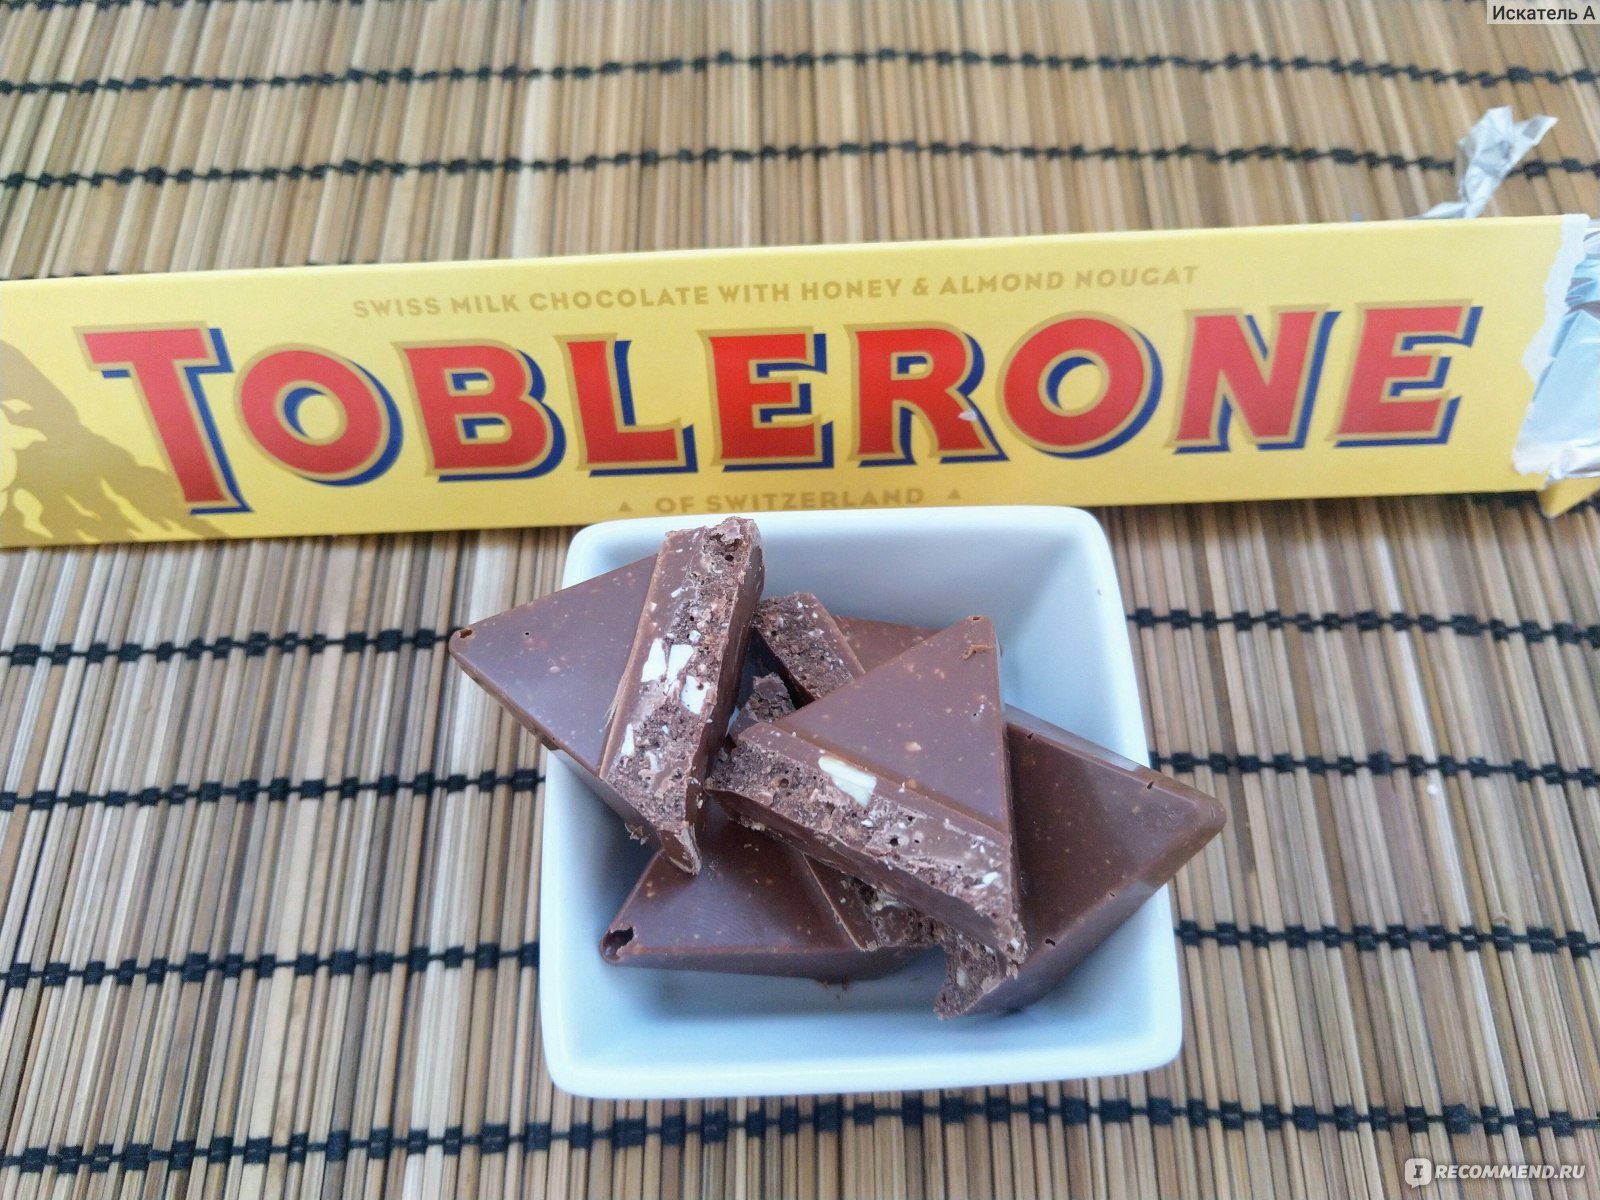 Шоколад toblerone купить. Шоколад пирамидками Toblerone. Шоколад Toblerone молочный. Шоколад швейцарский Toblerone. Шоколадные пирамидки.